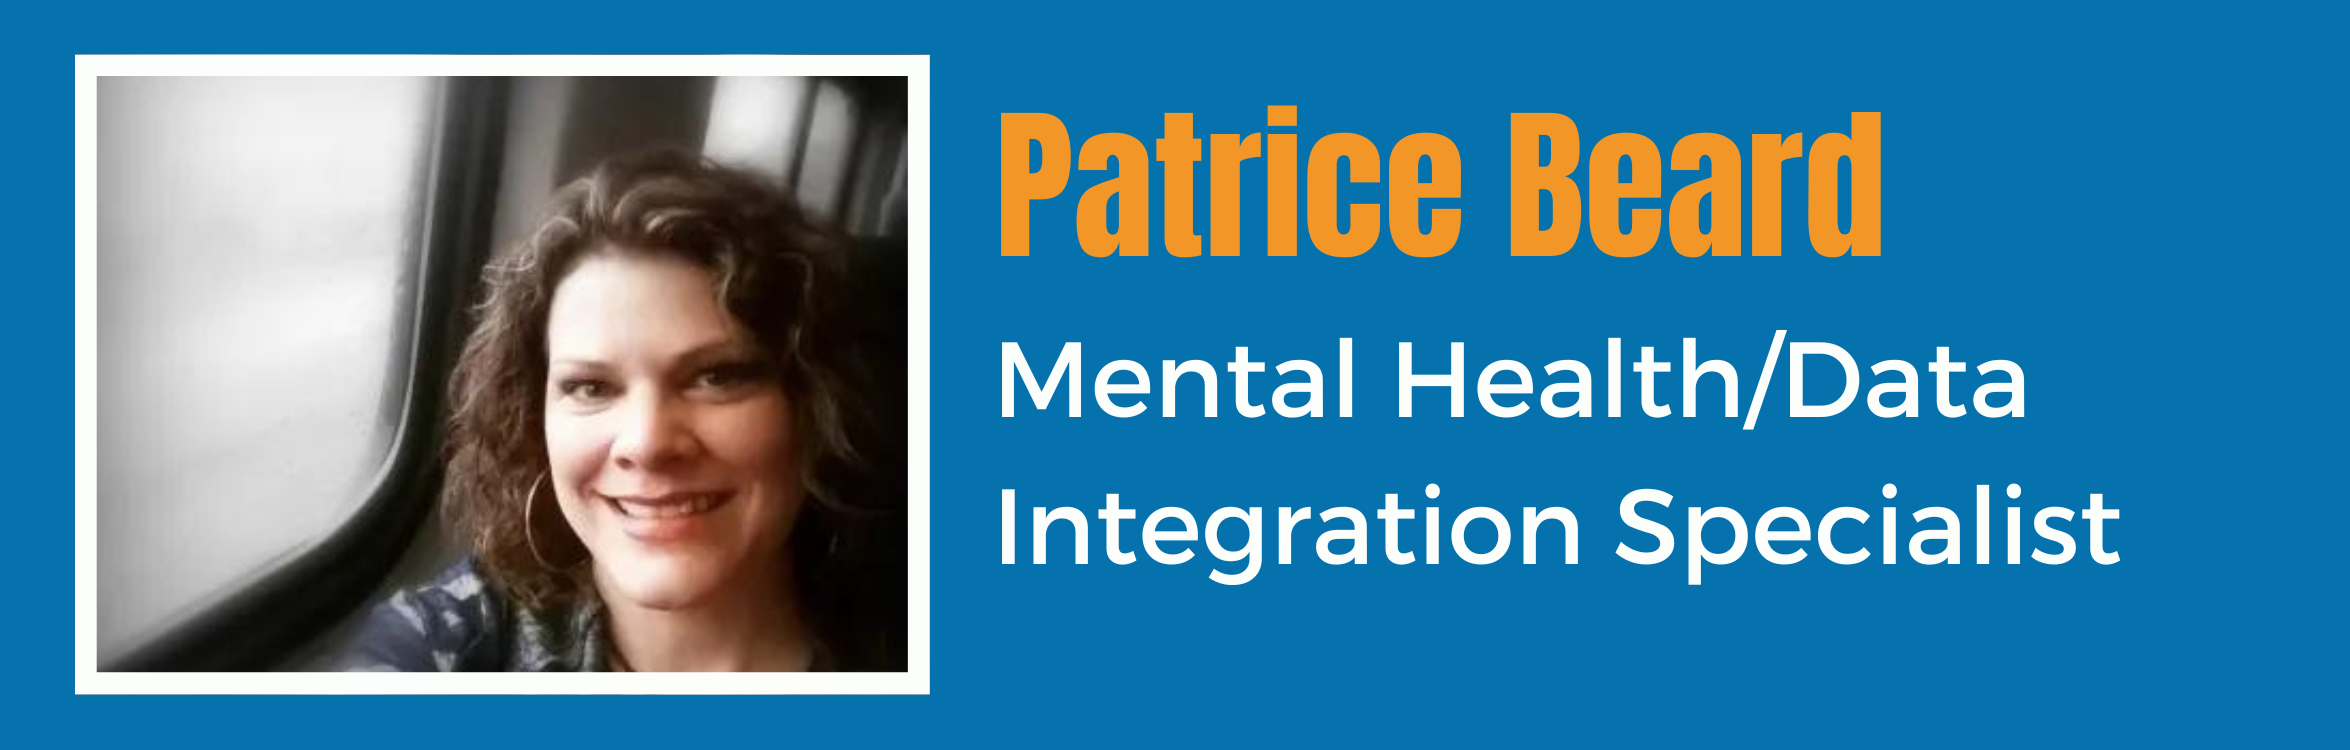 Patrice Beard - Mental Health/Data Integration Specialist